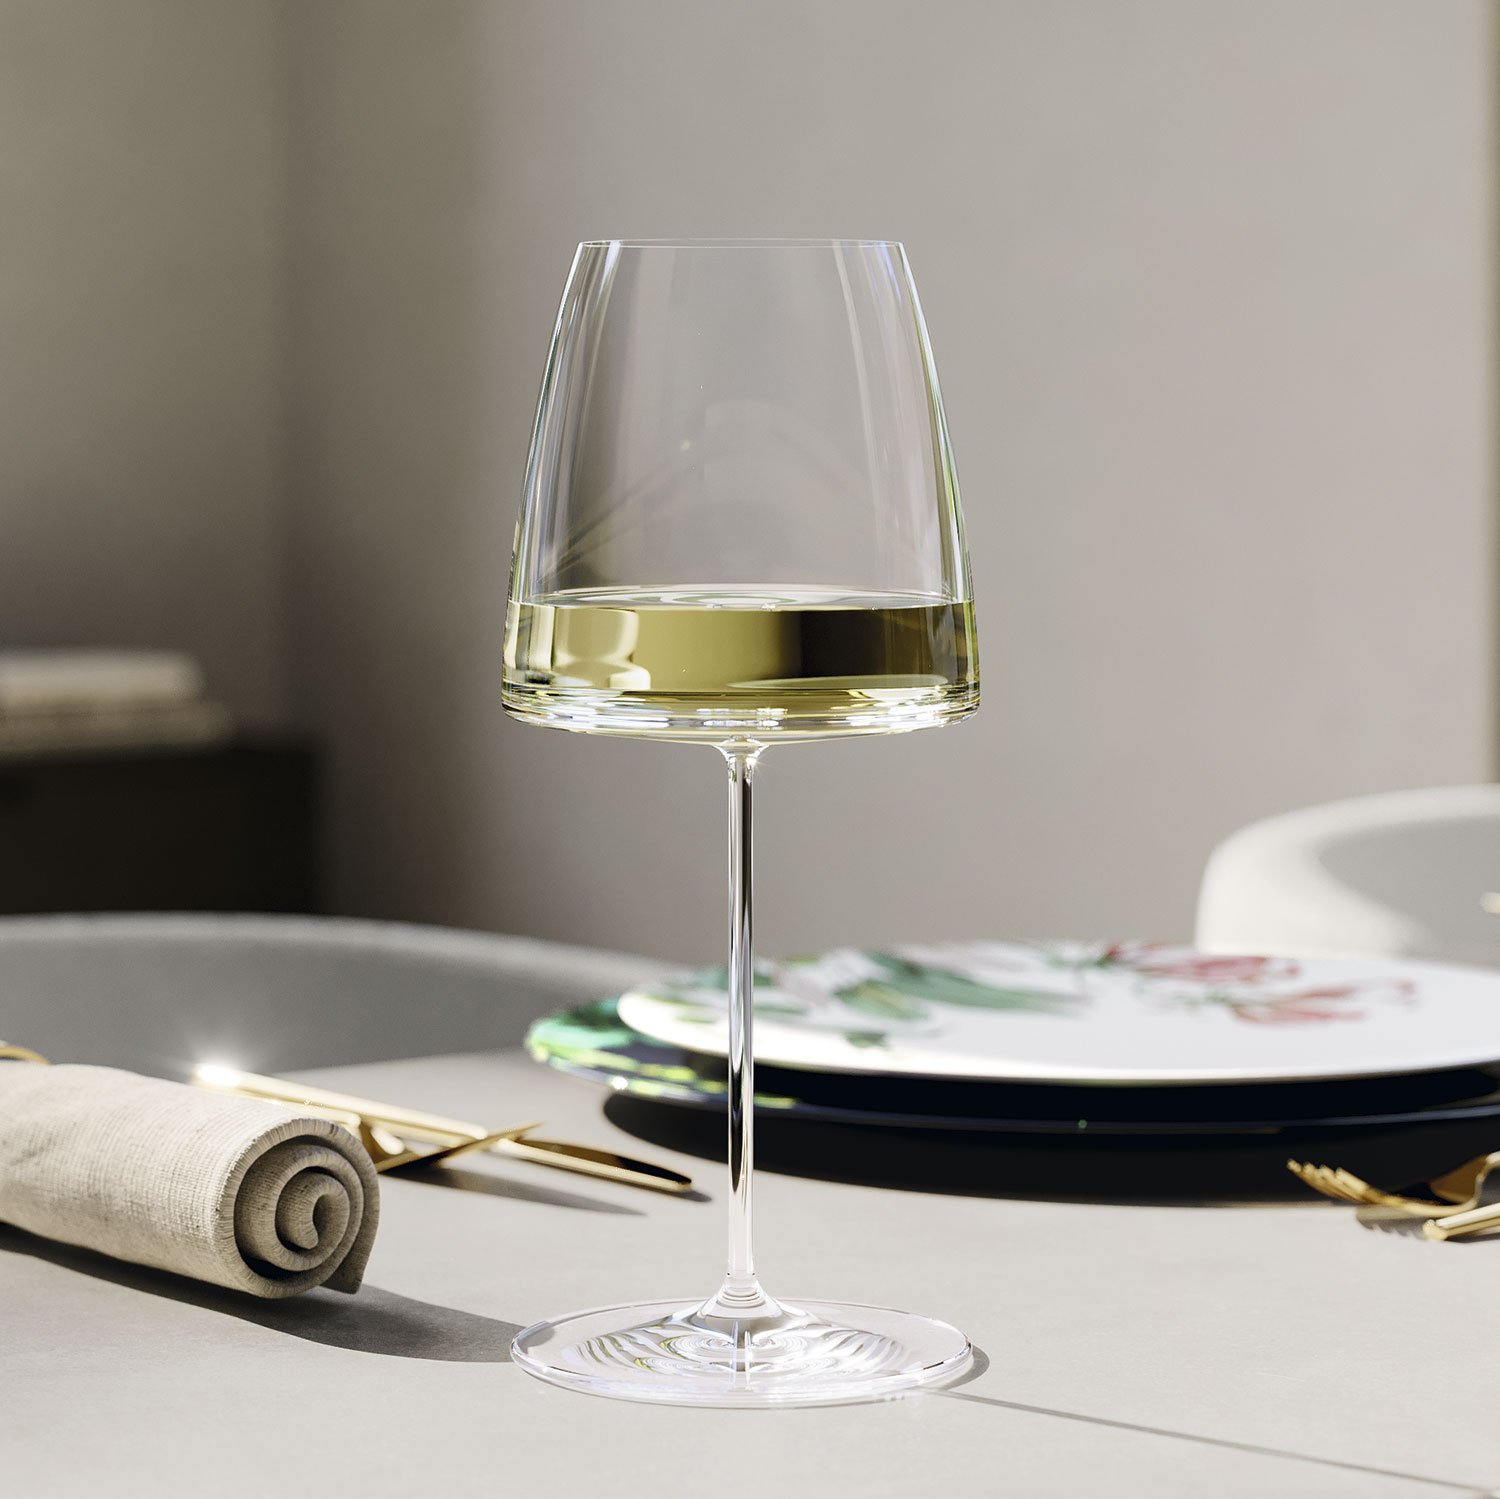 MetroChic Glass Набор бокалов для белого вина 2 шт, 590 мл, 23 см Villeroy & Boch
https://spb.v-b.ru
г.Санкт-Петербург
eshop@v-b.spb.ru
+7(812)3801977